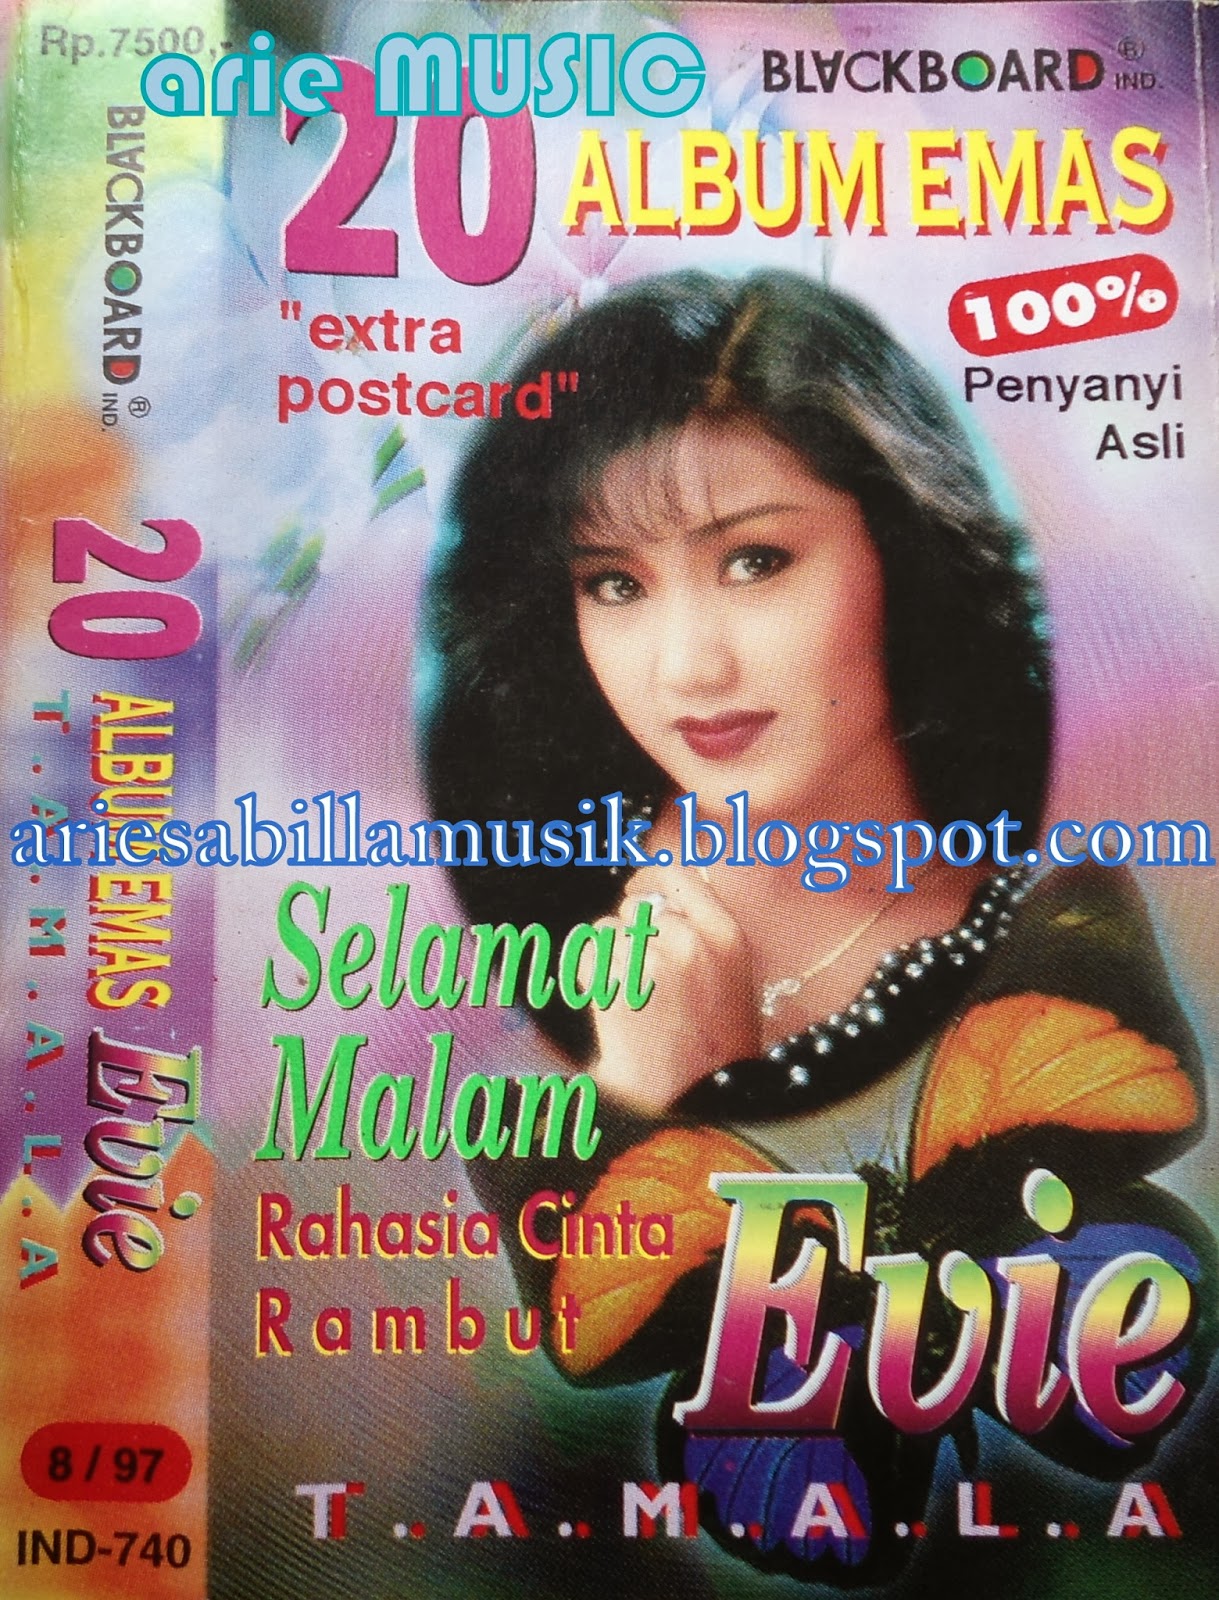 Download Evie Tamala Koleksi Lagu Terbaik - Om New Pallapa Mp3 (08:28 Min) - Free Full Download All Music